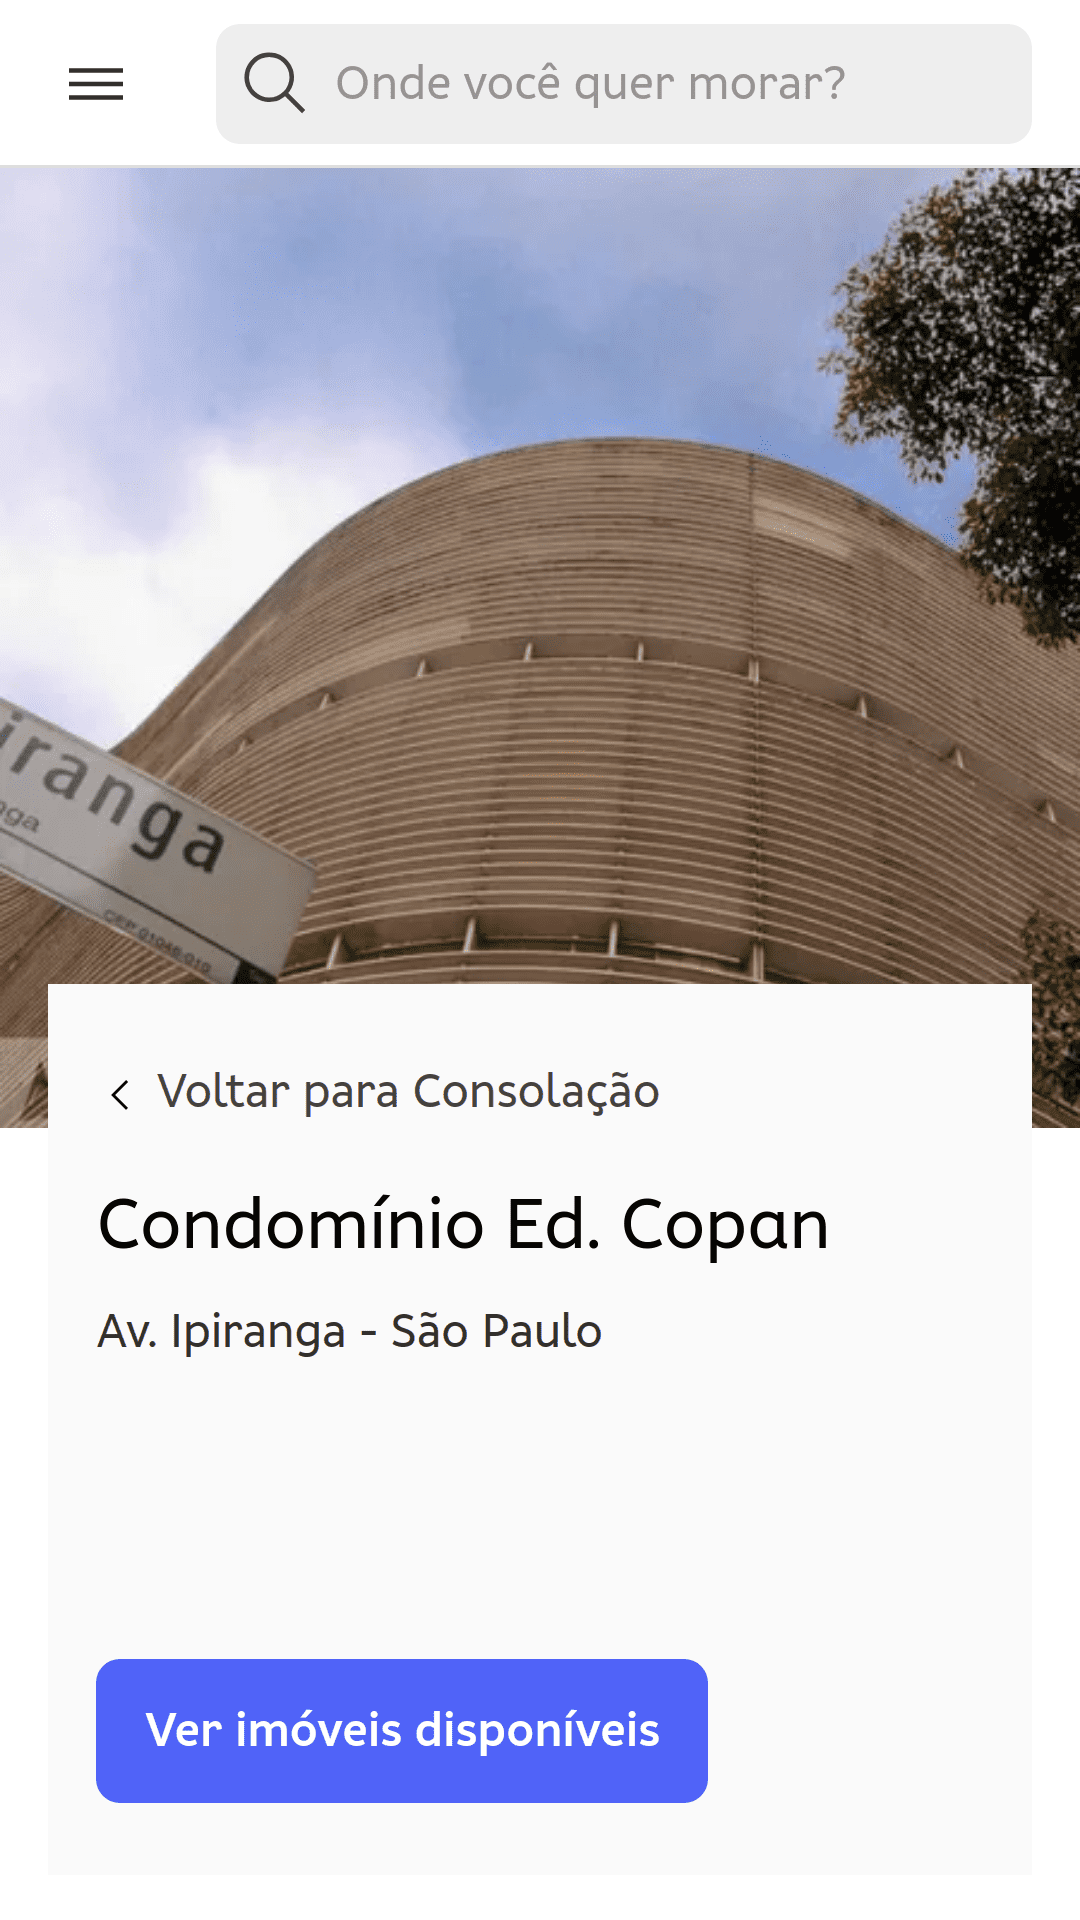 Edifício Copan (巴西聖保羅) 的住宅大樓頁面。從地平面拍攝的相片會顯示建築物結構的曲線。